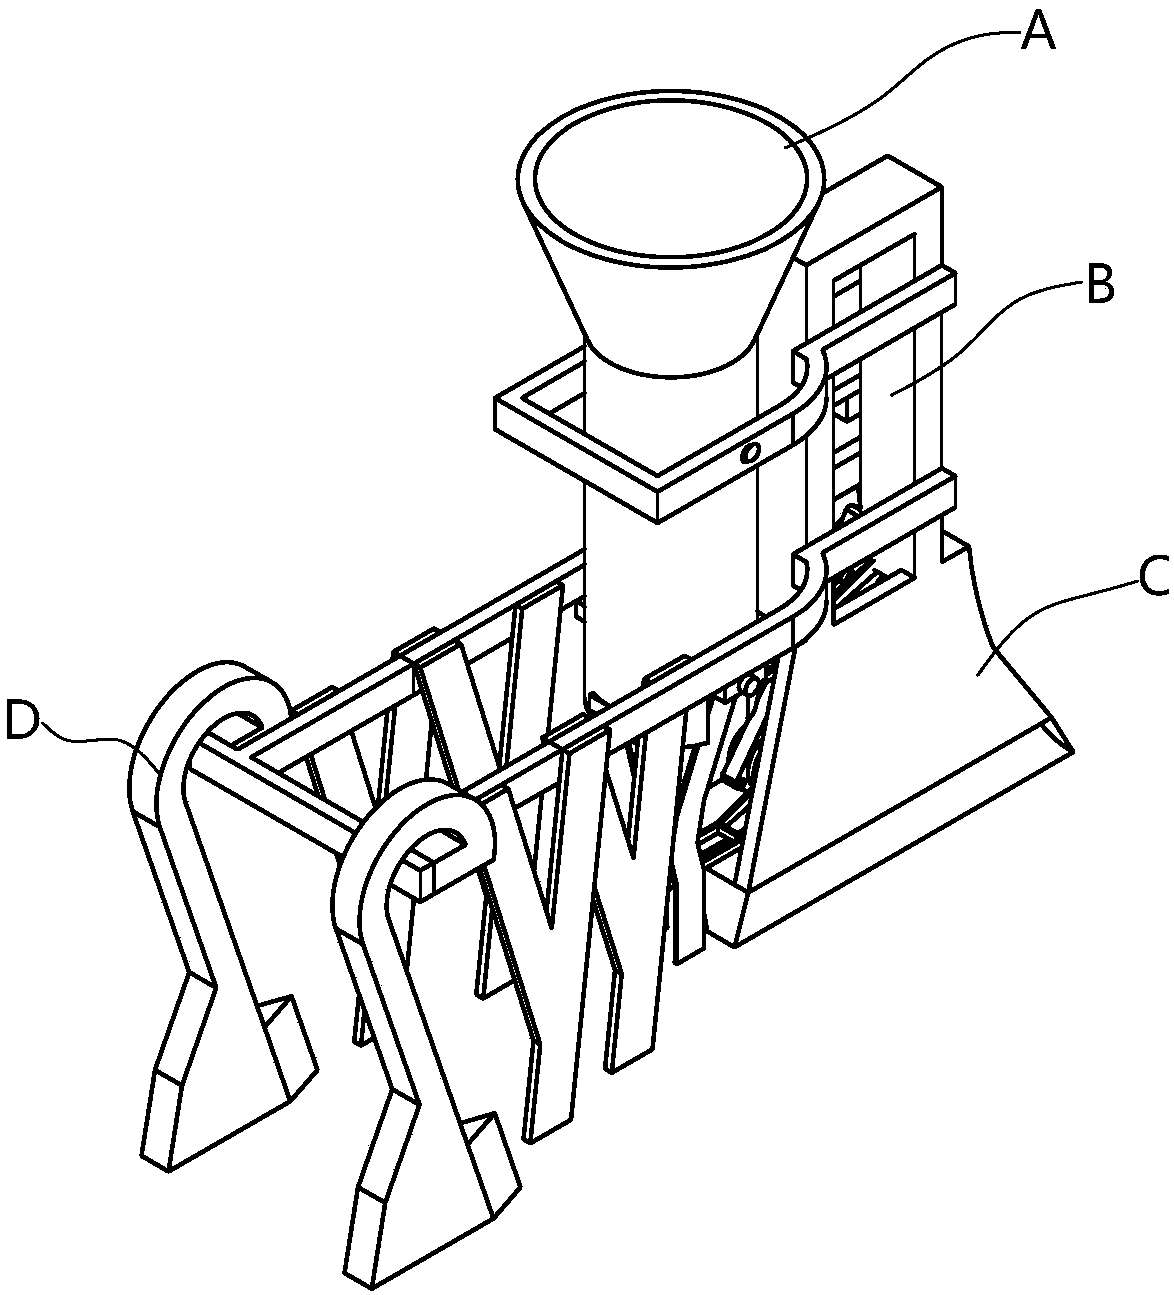 Control method of circulating propulsion-type rape pot seedling transplanting device